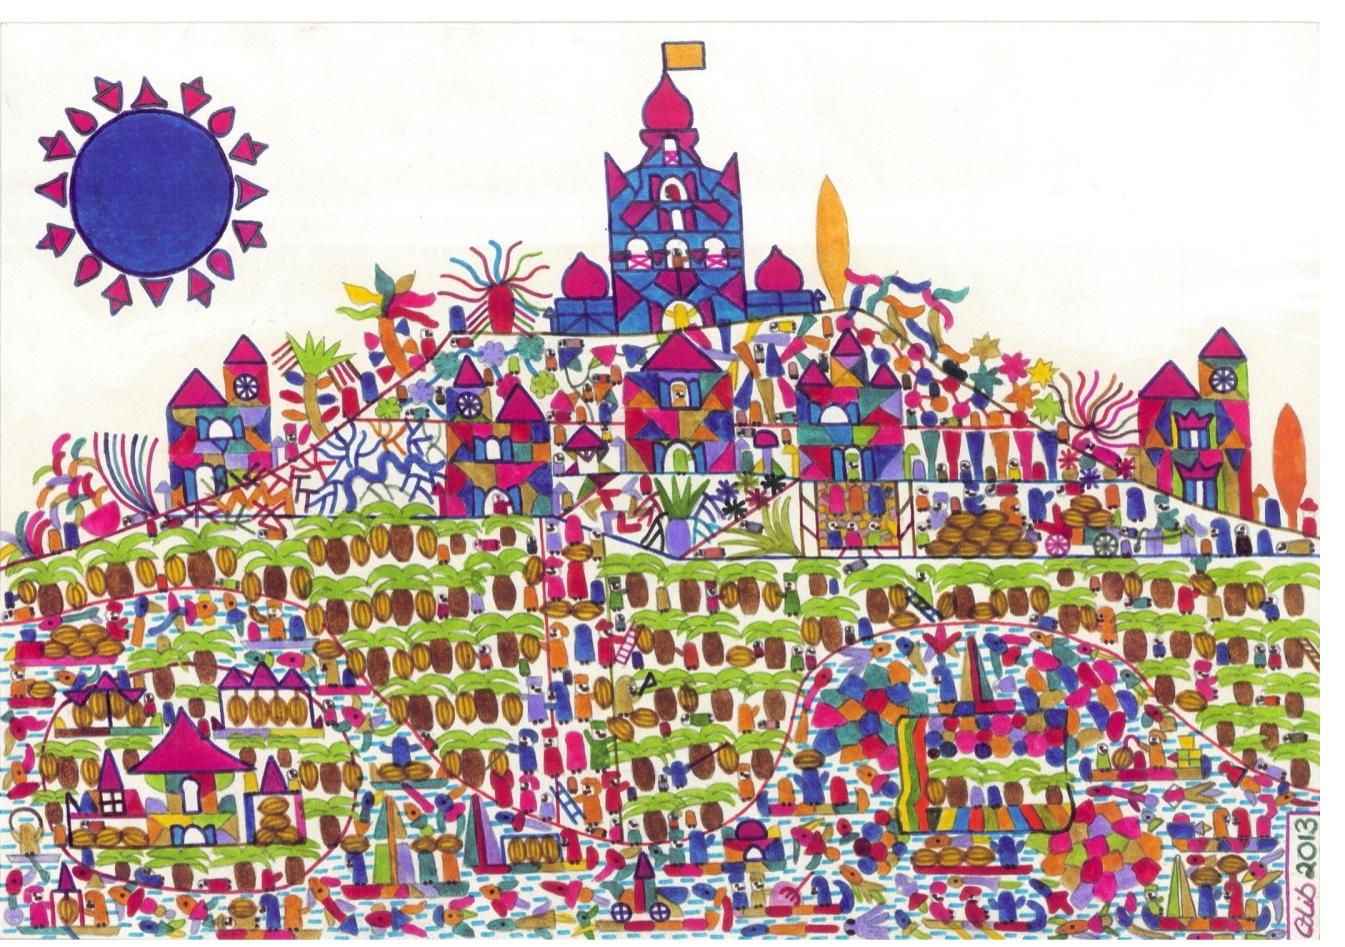 Adib Fattal - 618 "A Village with Bananas" - 30cm x 59cm - ink on paper - 2013